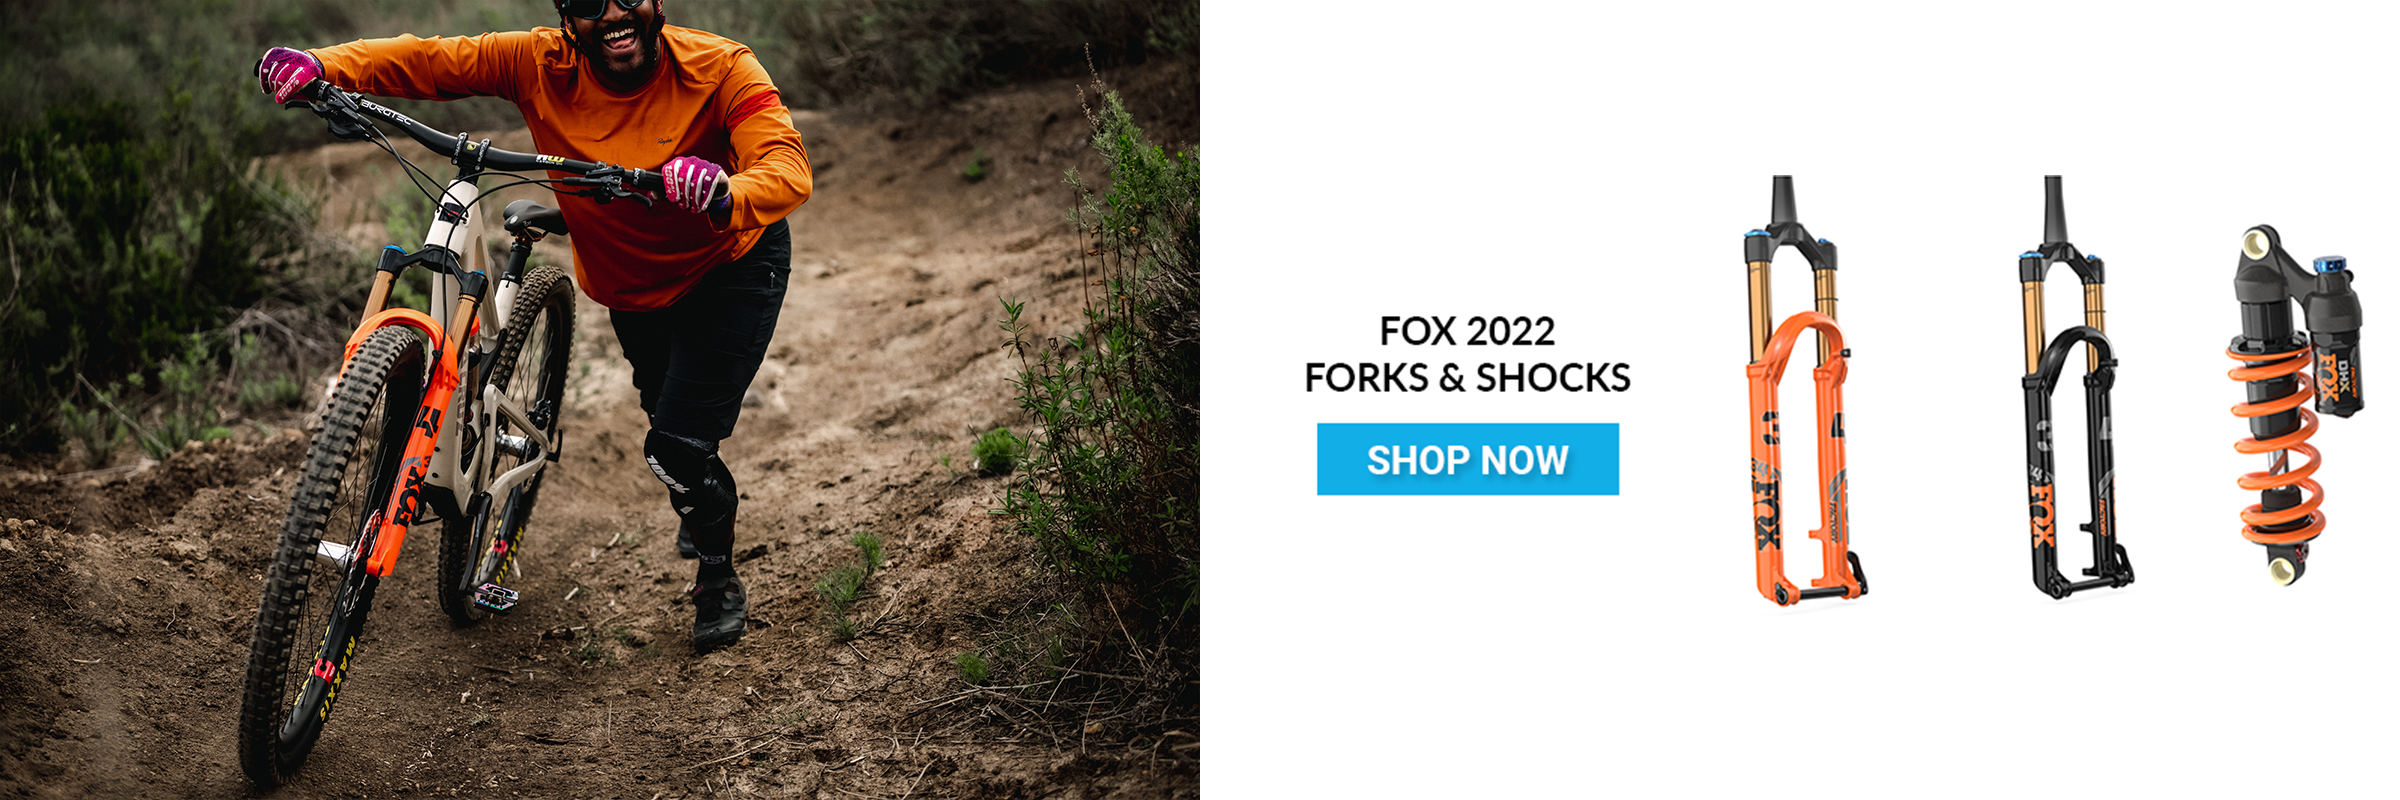 FOX 2022 FORKS & SHOCKS